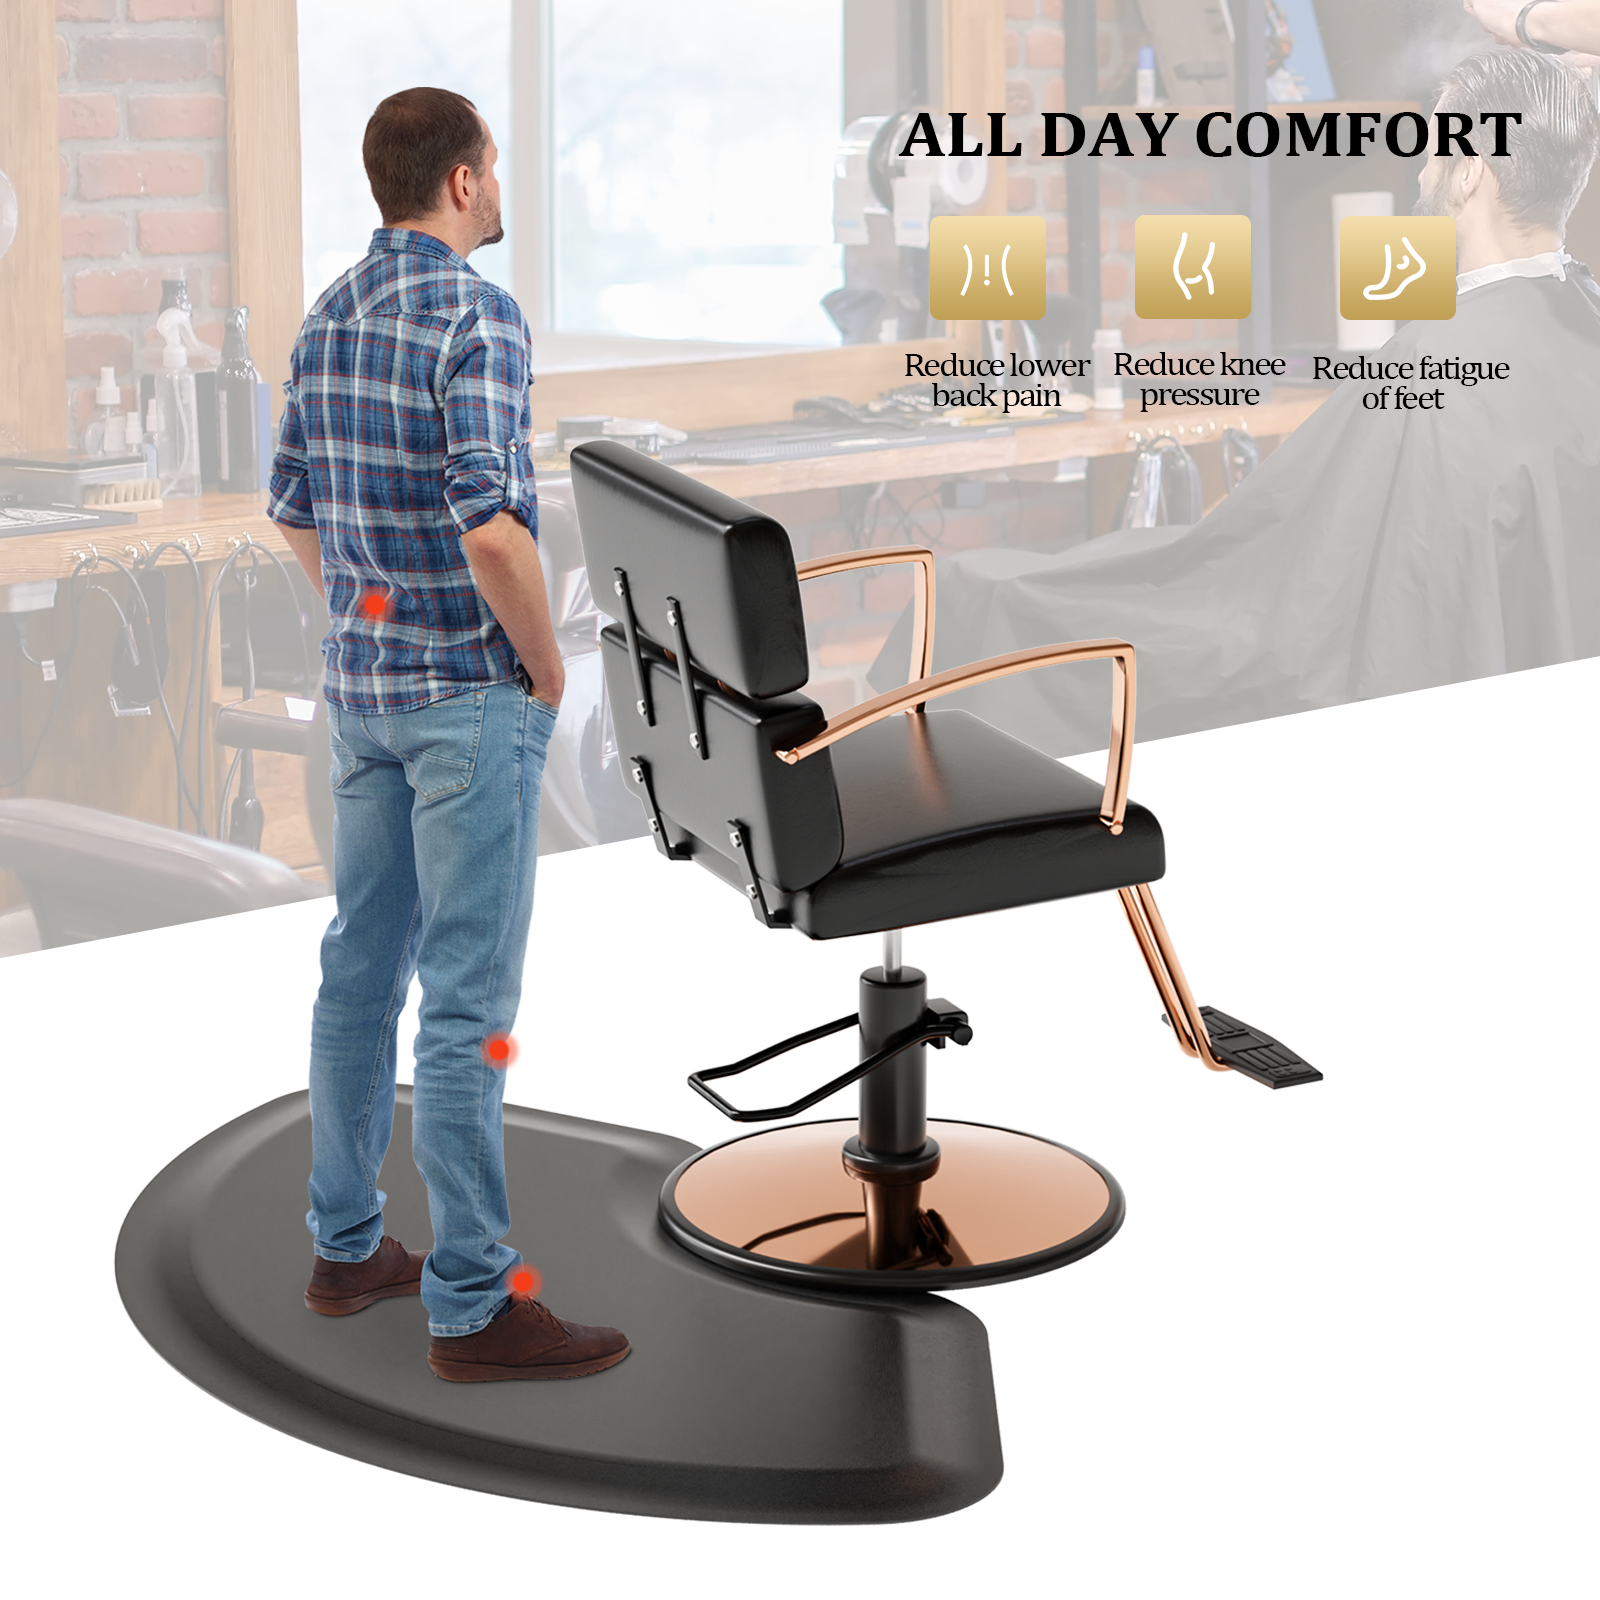 Wholesale 2 in 1 Anti Fatigue Office Chair Mats Standing Desk Mats